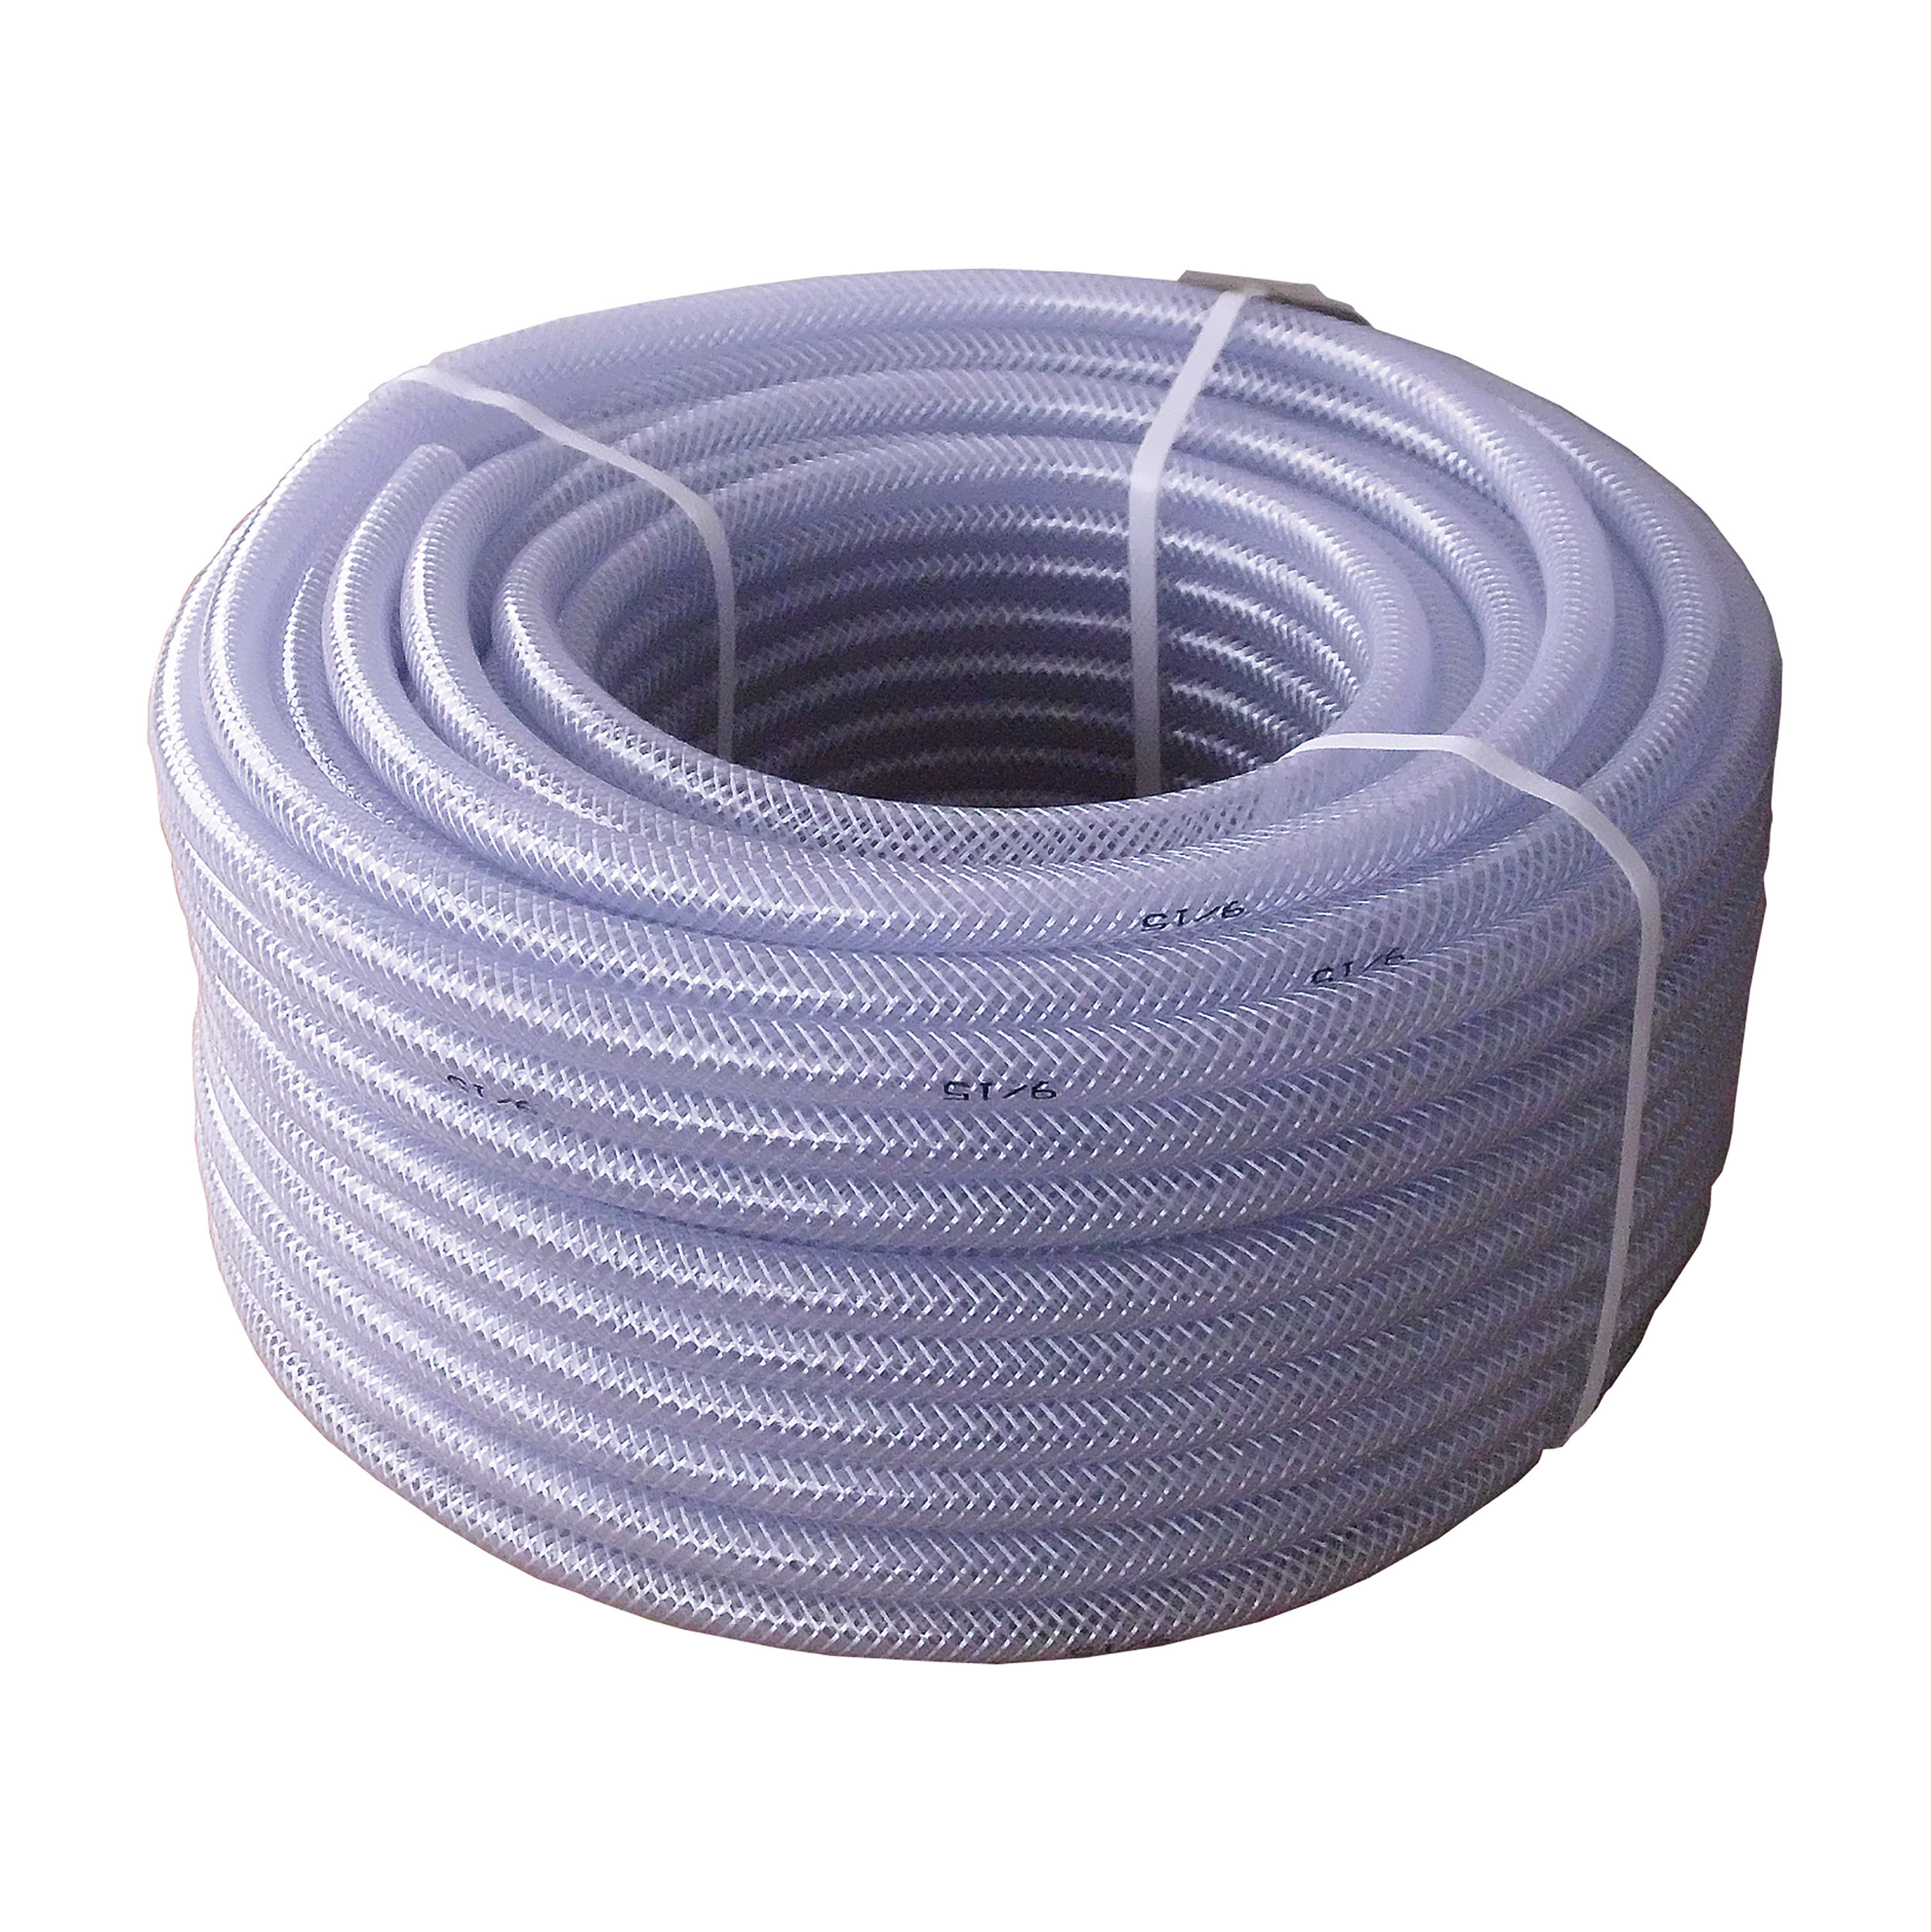 PVC fabric hose, DN × wall thickness: Ø6 × 3 mm, pressure at 20 °C: 363 psi, burst pressure: 1088 psi, length: 50 m, full roll